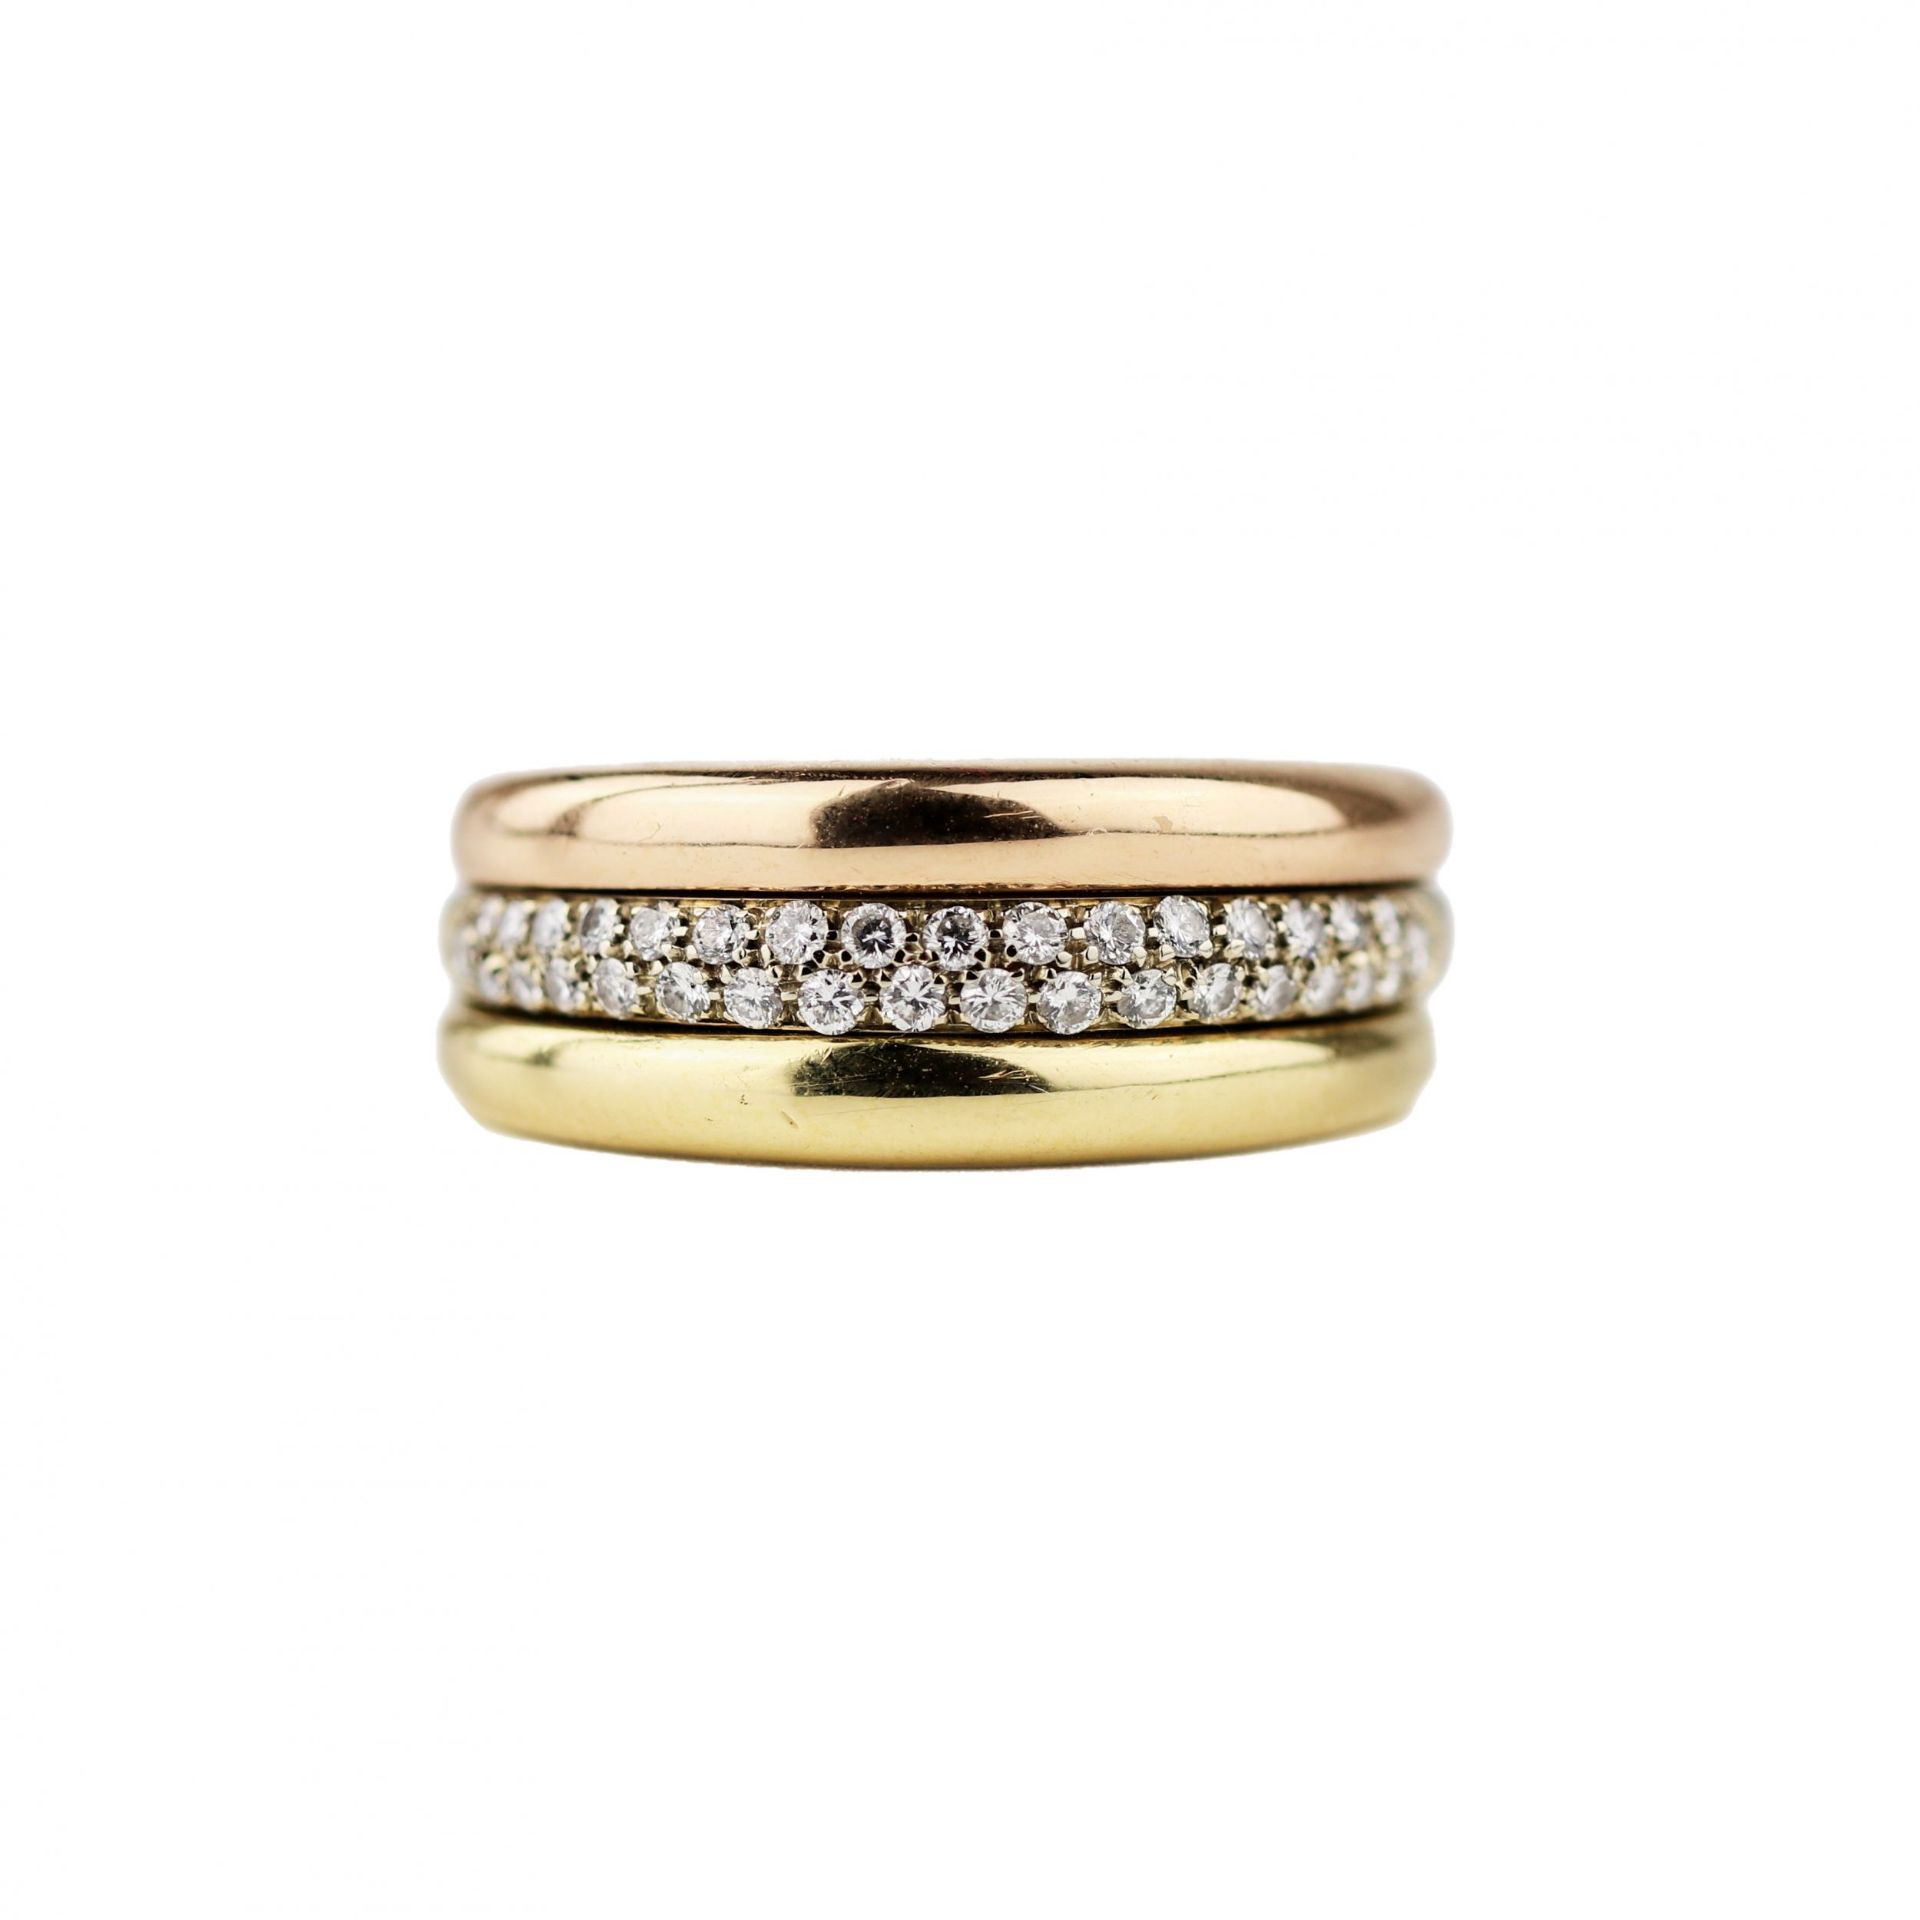 Cartier Mobilis tricolor 0.750 diamond ring in the original case. - Image 3 of 8